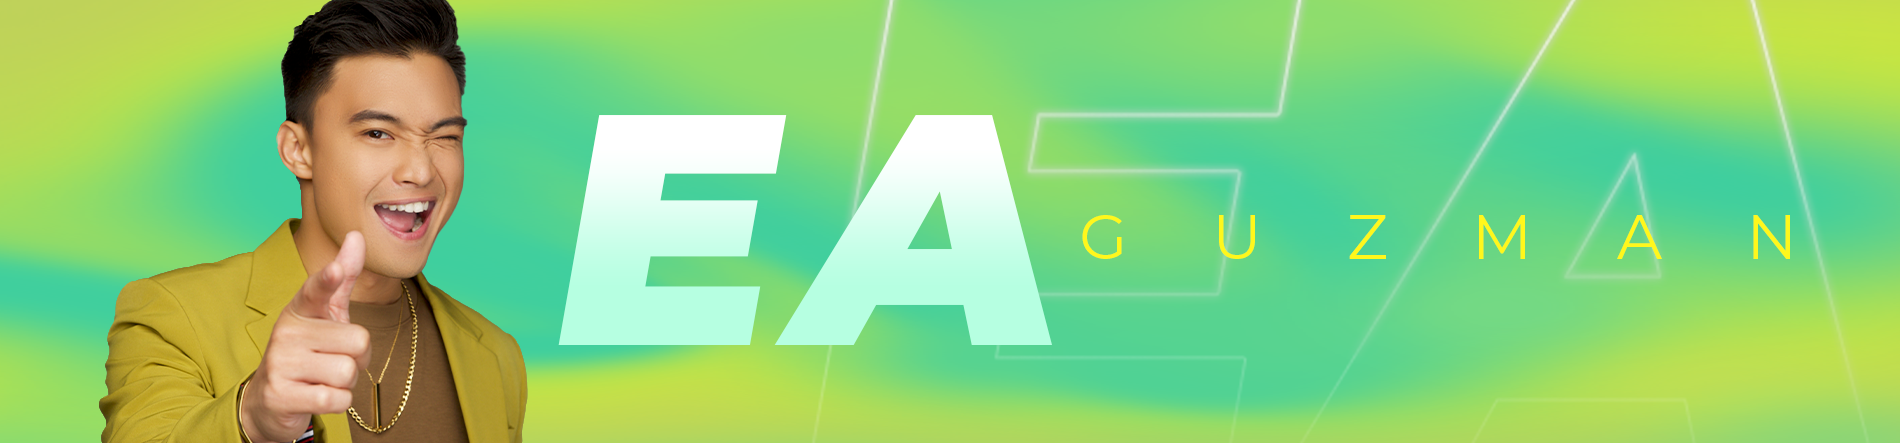 EA Guzman Desktop Banner